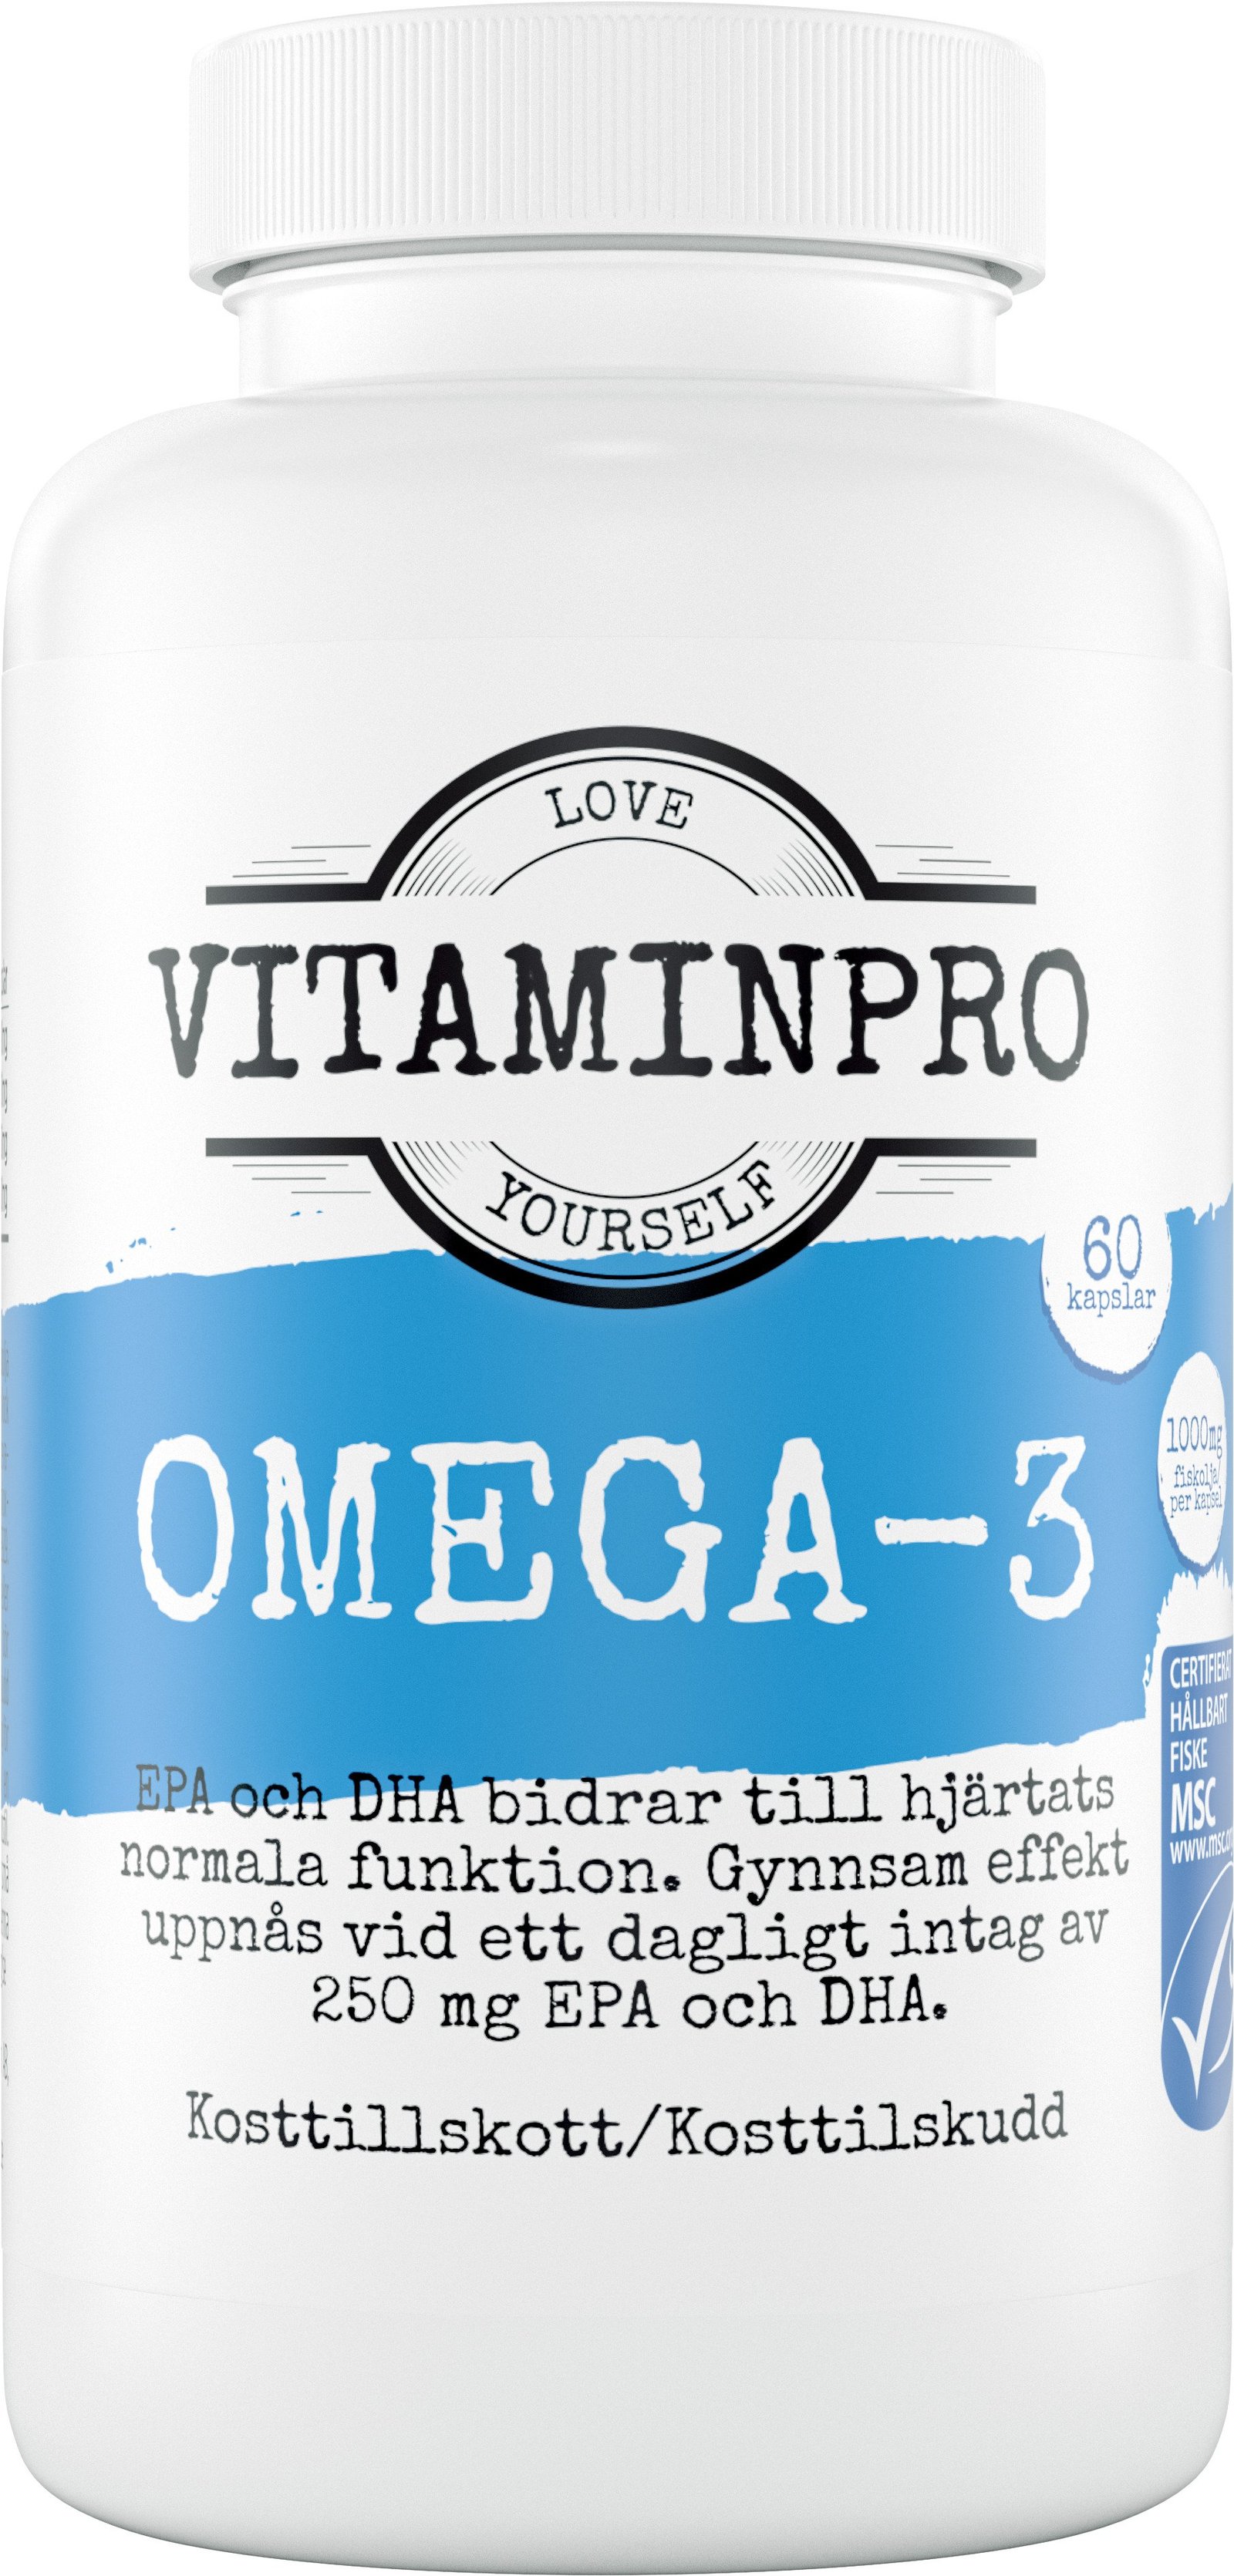 Vitaminpro Omega-3 60 kapslar